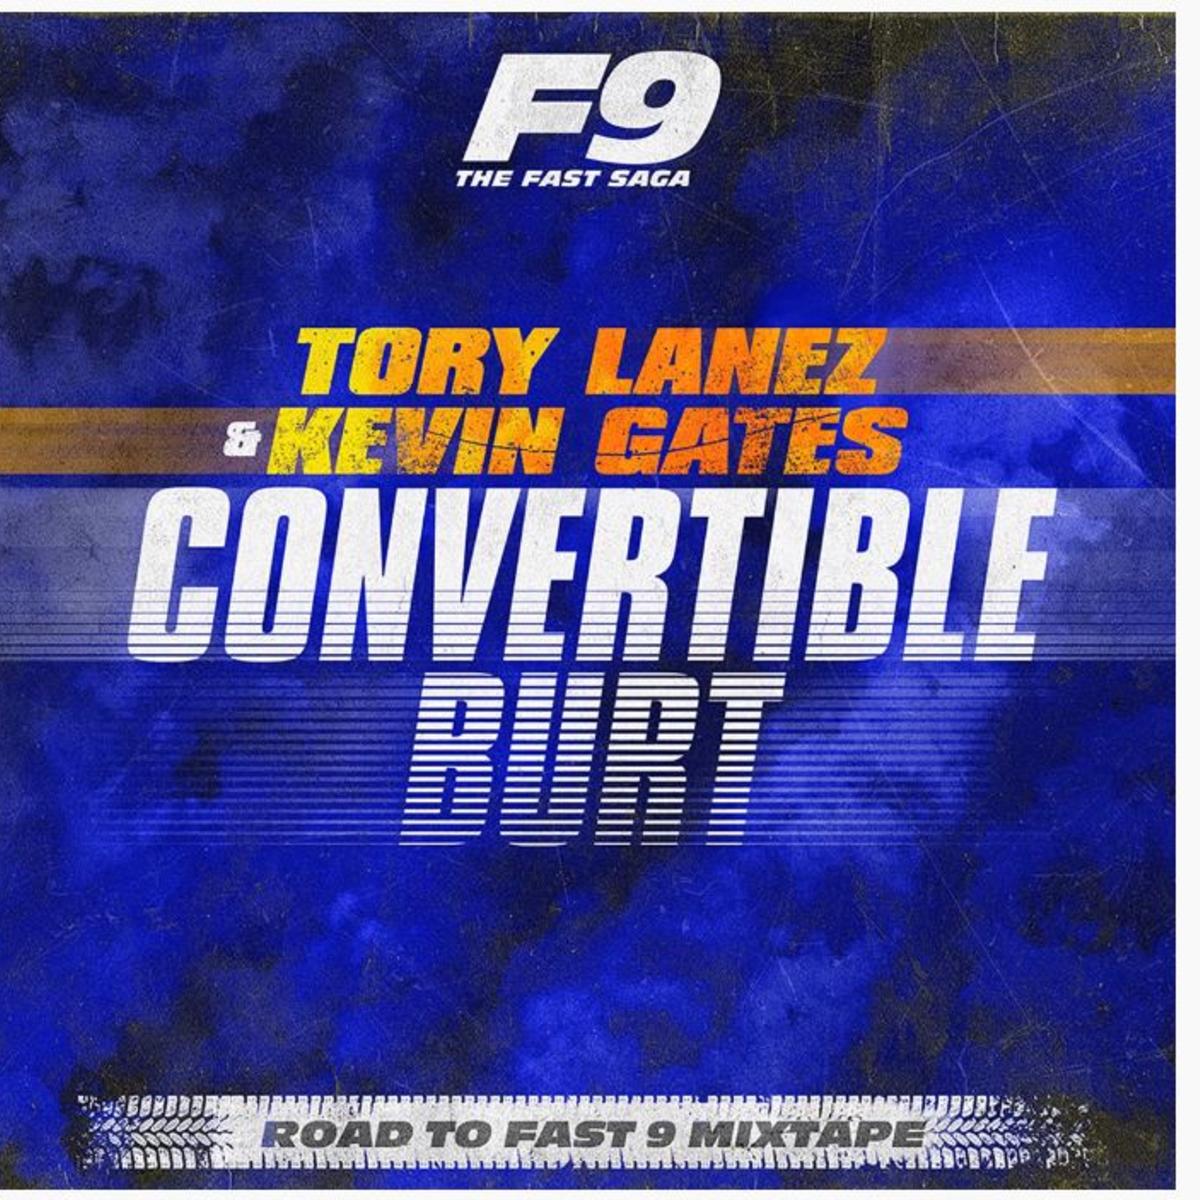 Tory Lanez - Convertible Burt Ft. Kevin Gates